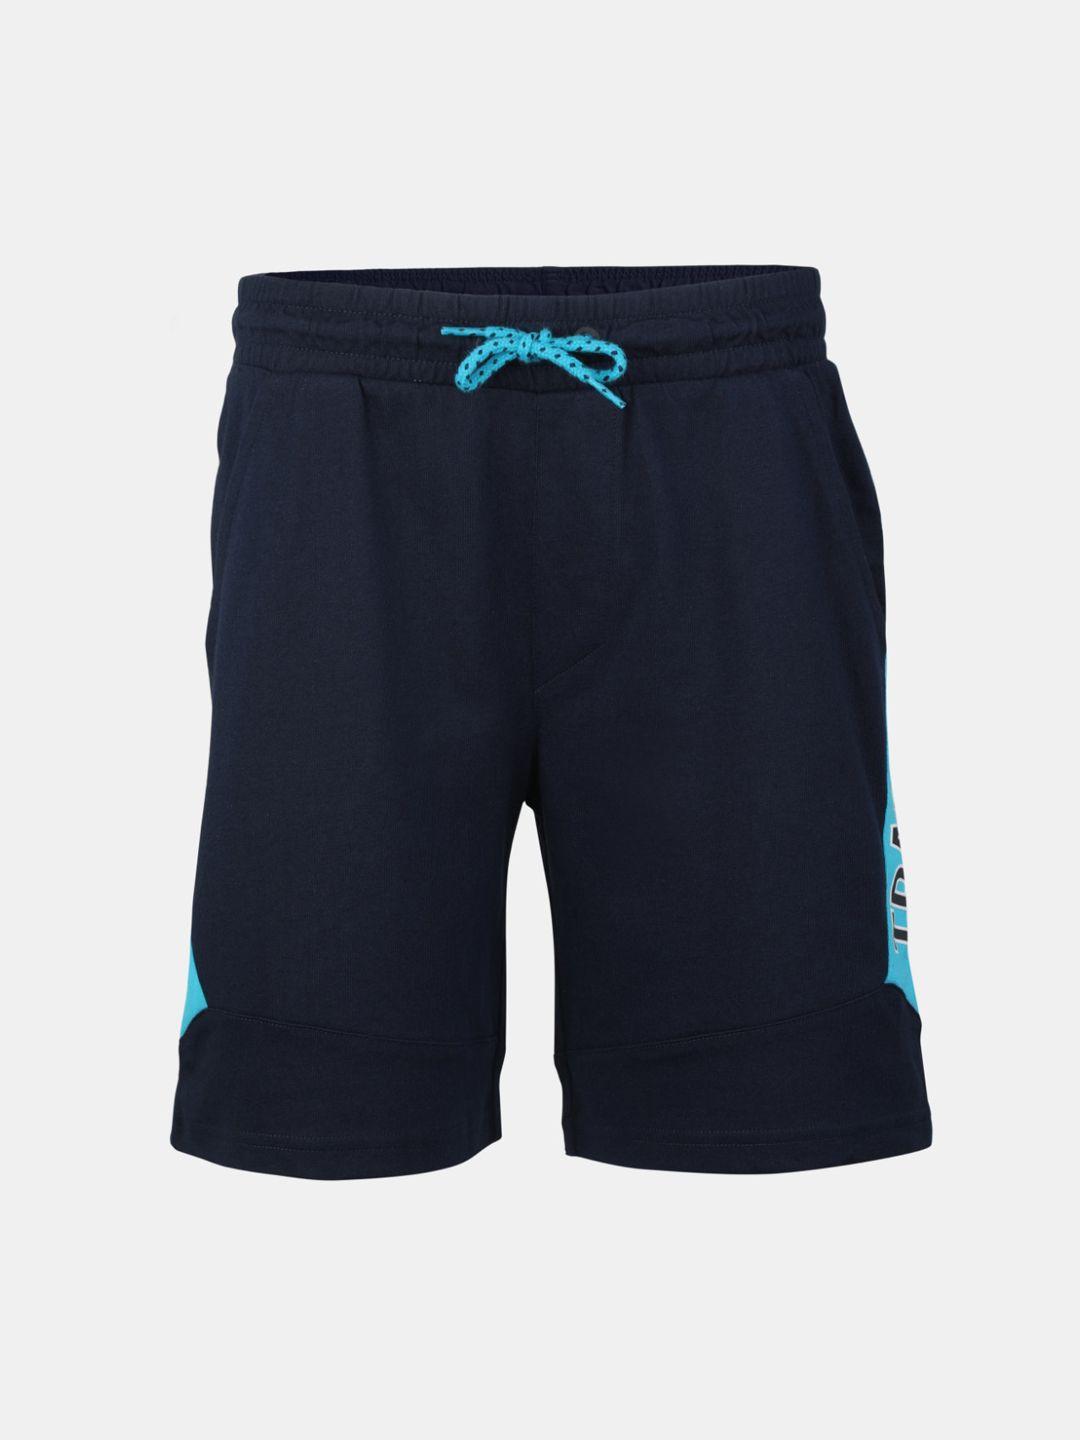 jockey-boys-navy-blue-shorts